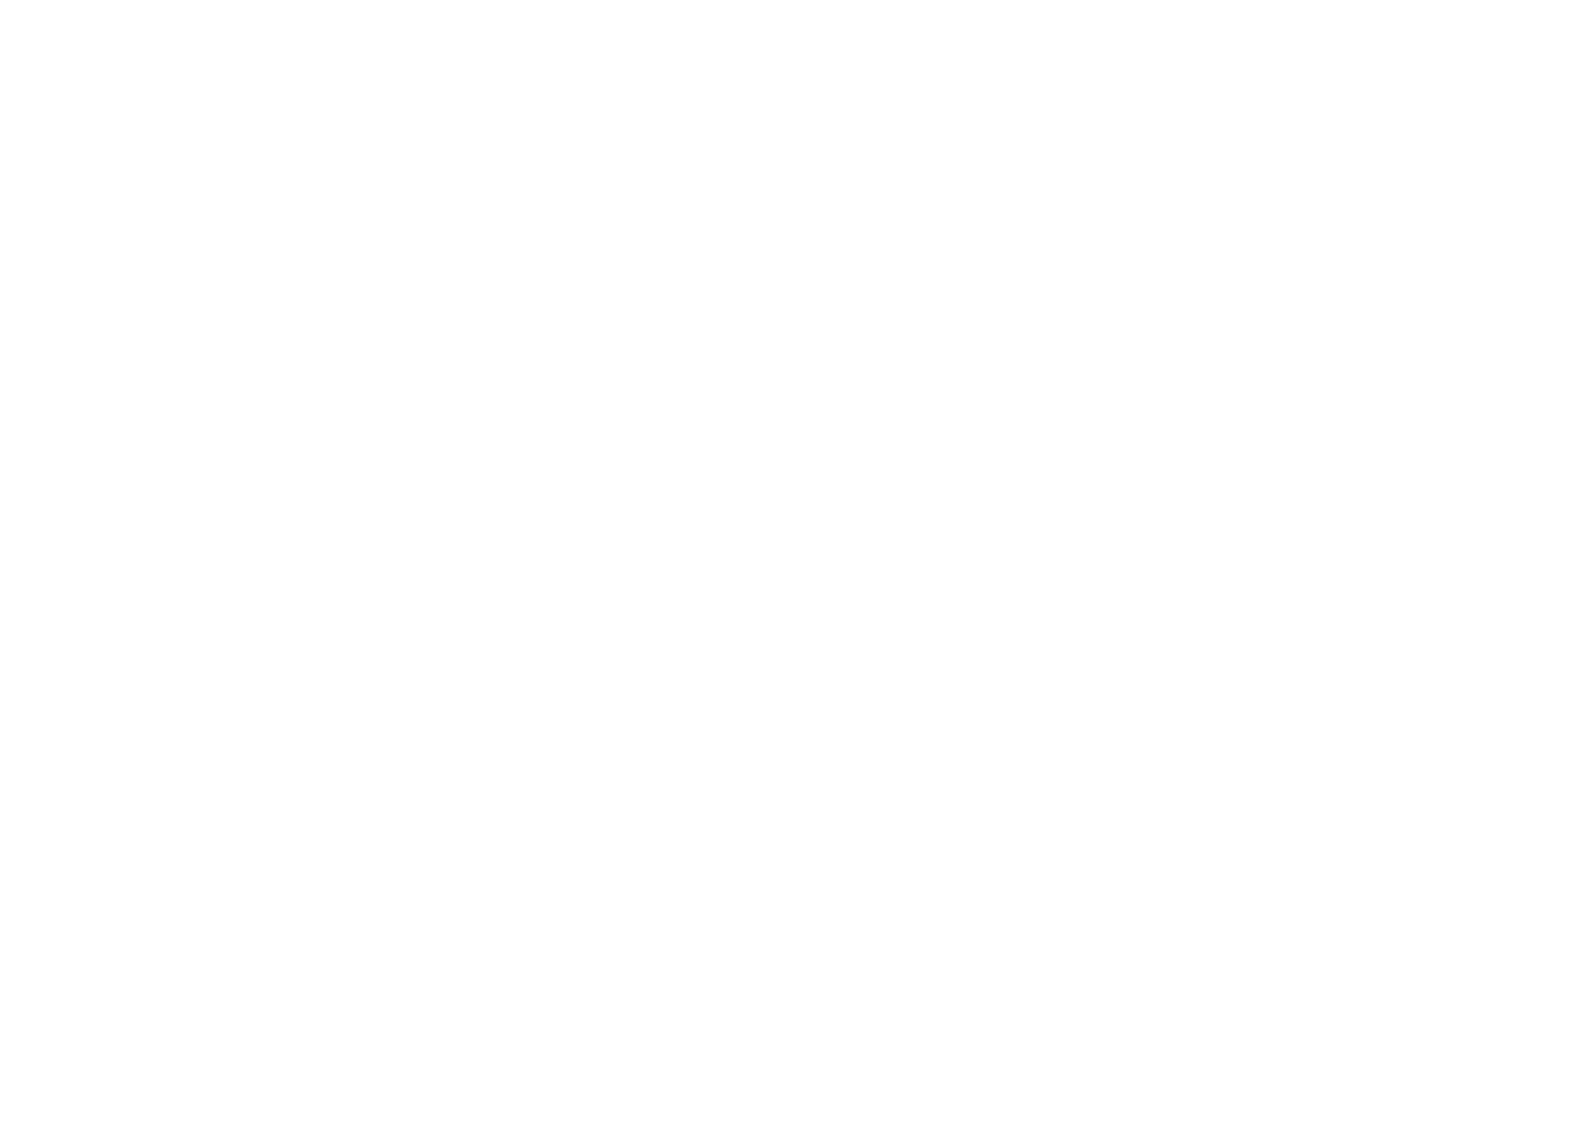 Omeros Corporation logo large for dark backgrounds (transparent PNG)